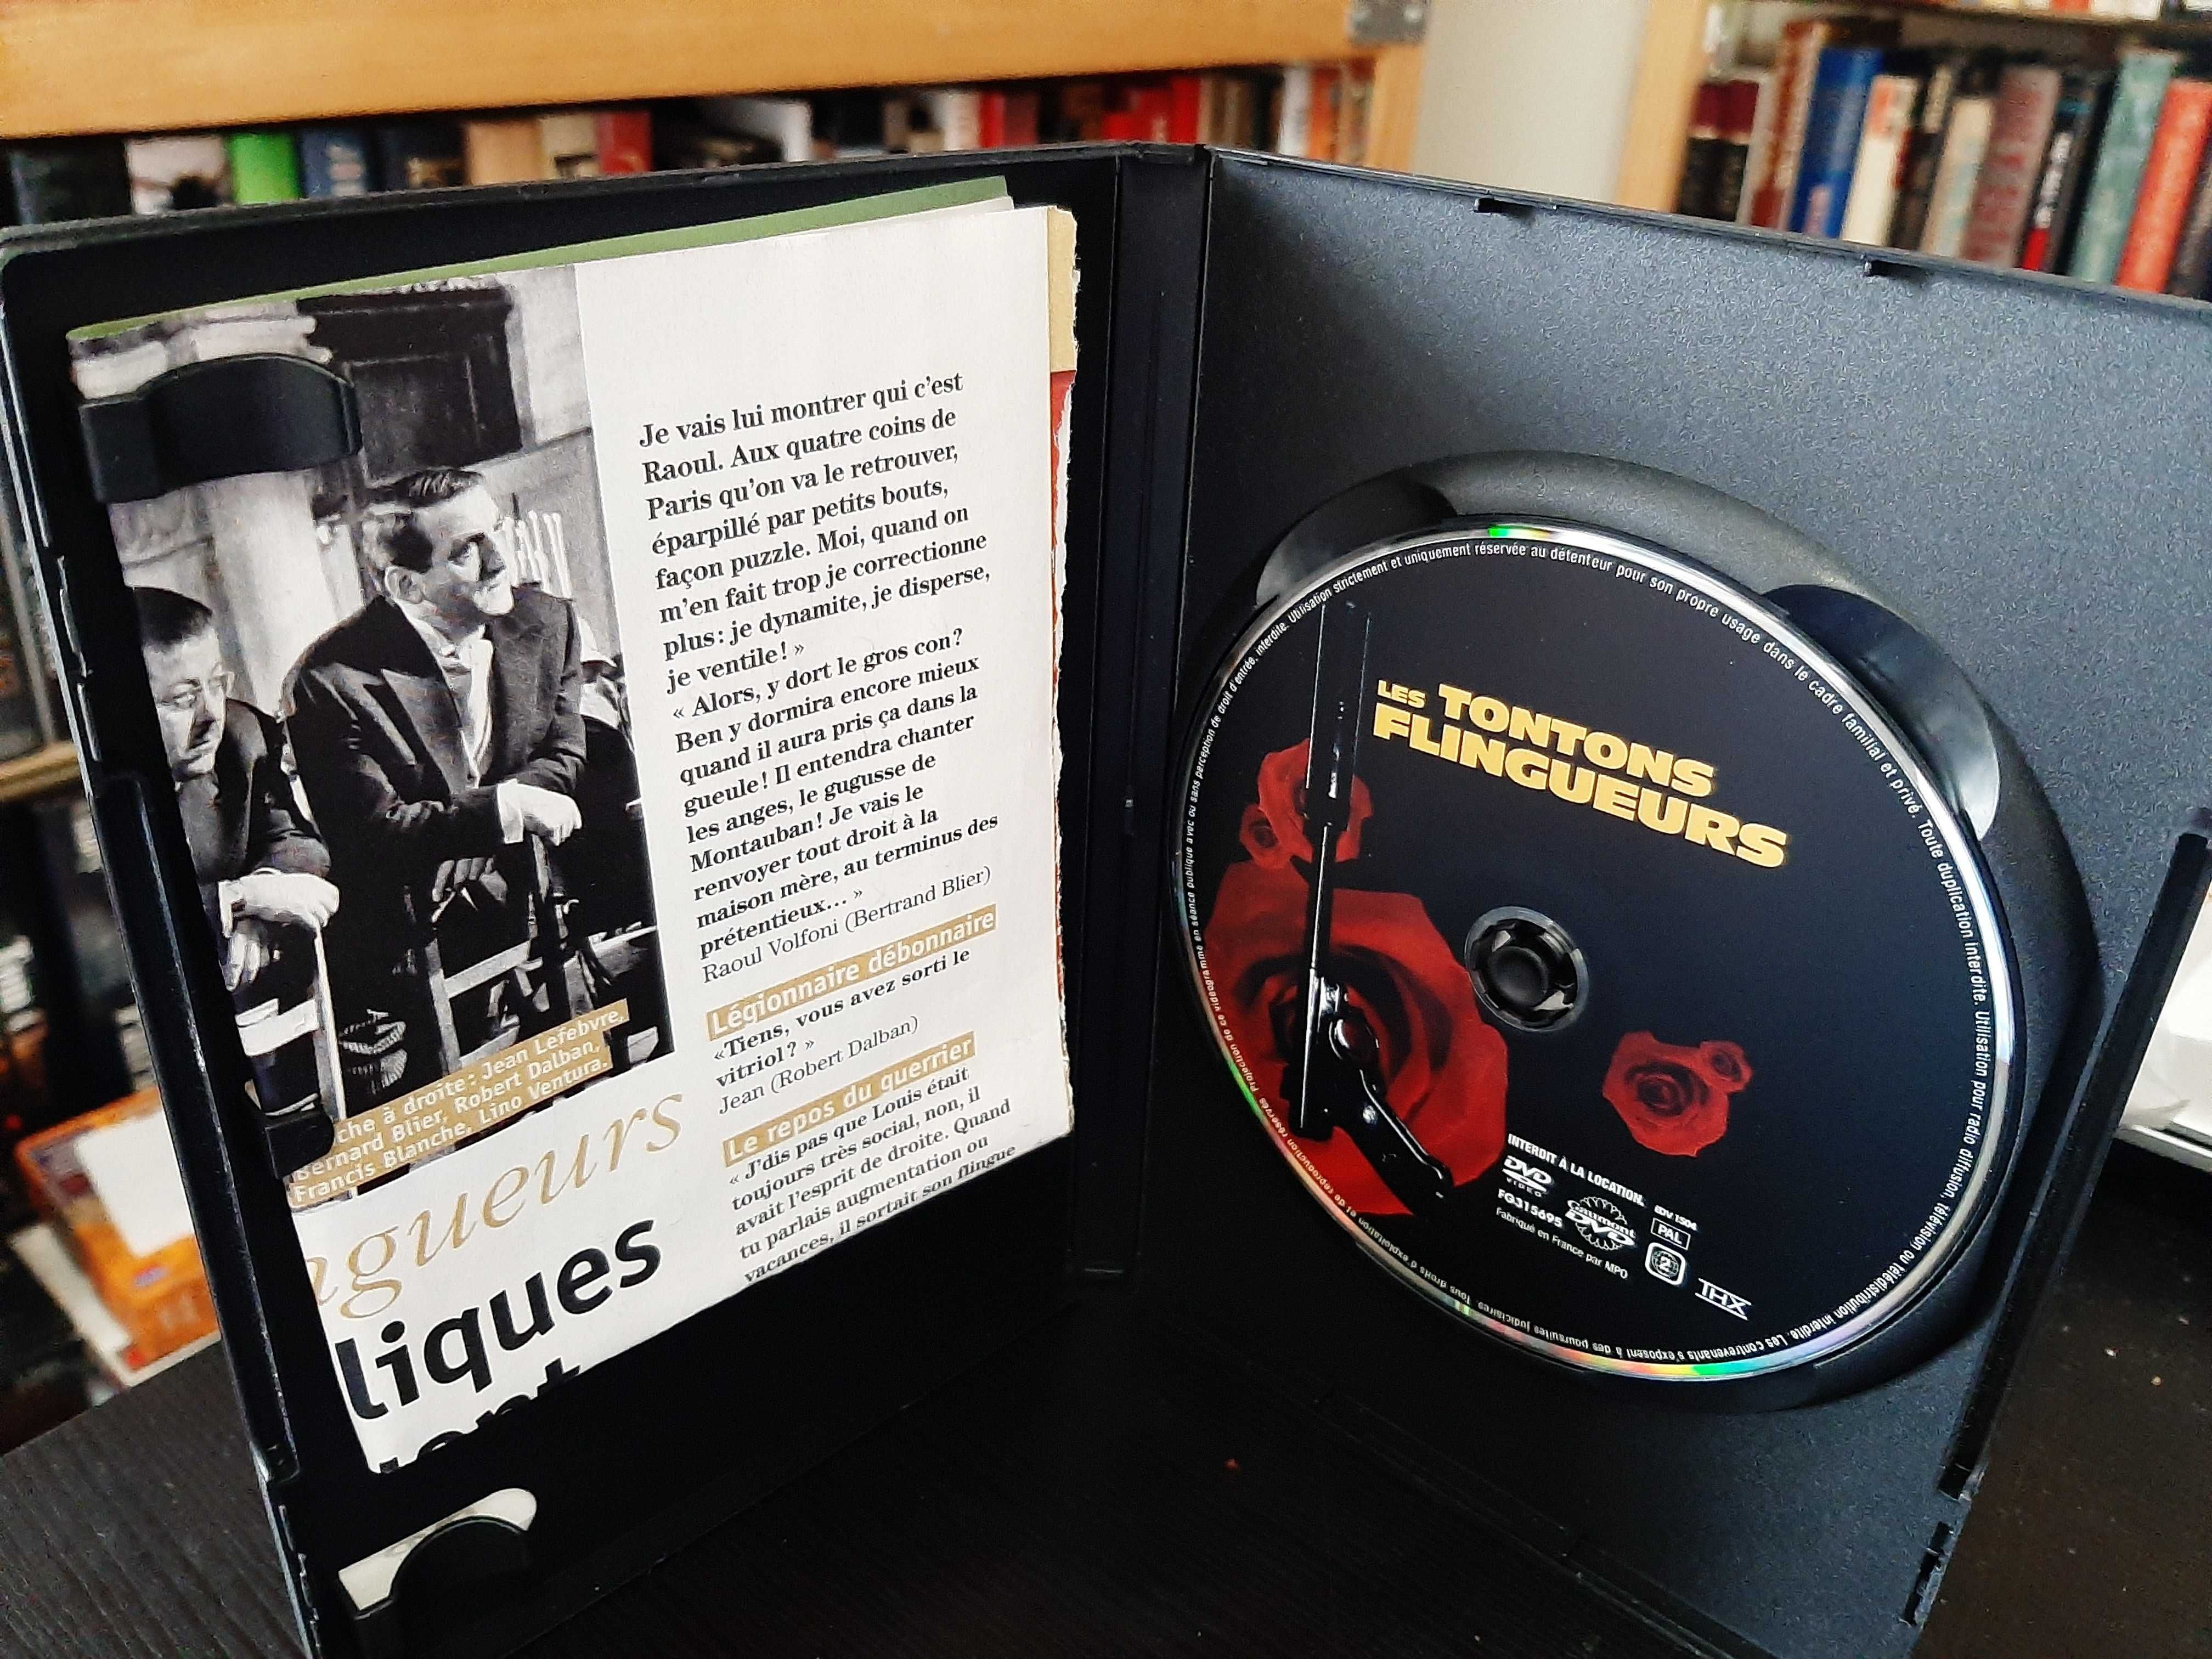 Georges Lautner – Les Tontons Flingueurs - Lino Ventura, B. Blier